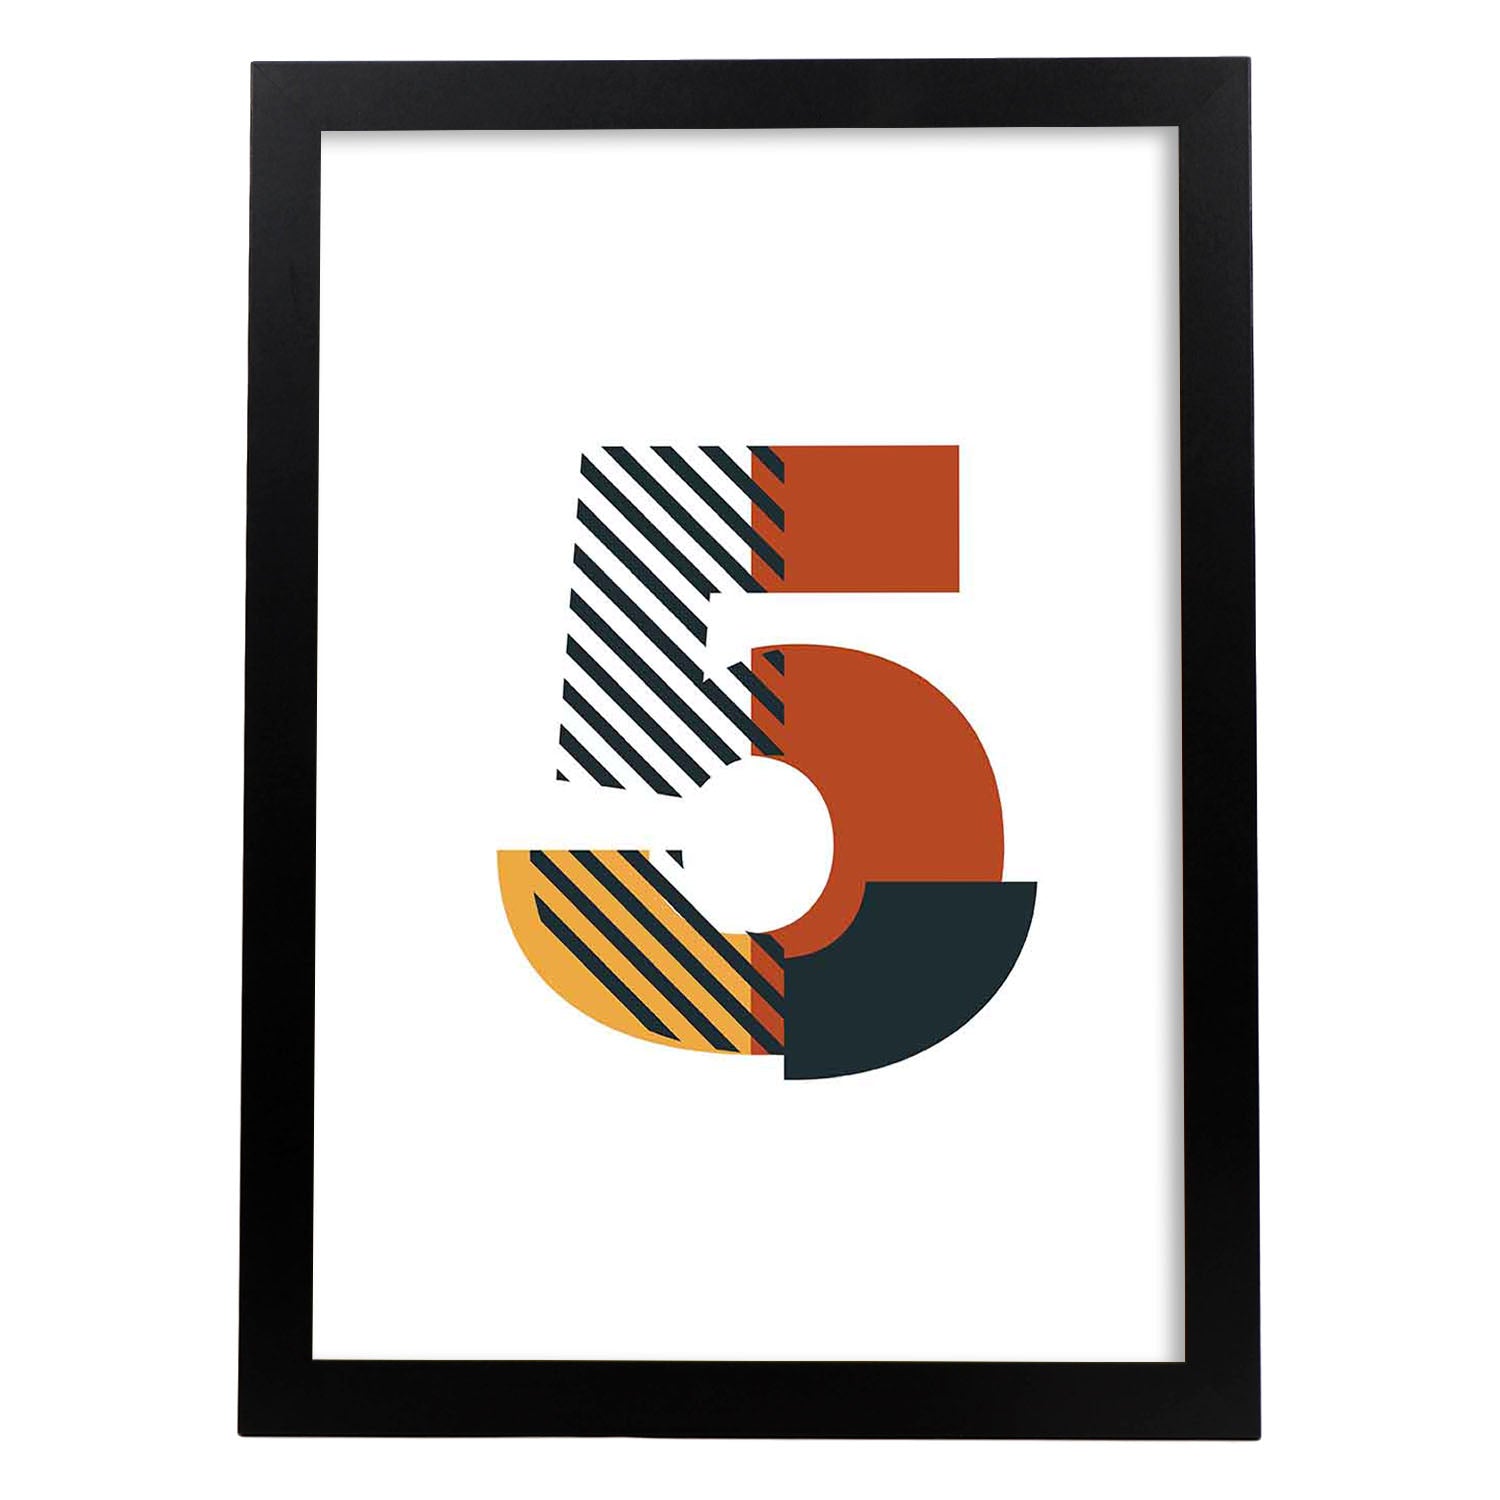 Poster de número 5. Lámina estilo Geometria con imágenes del alfabeto.-Artwork-Nacnic-A3-Marco Negro-Nacnic Estudio SL